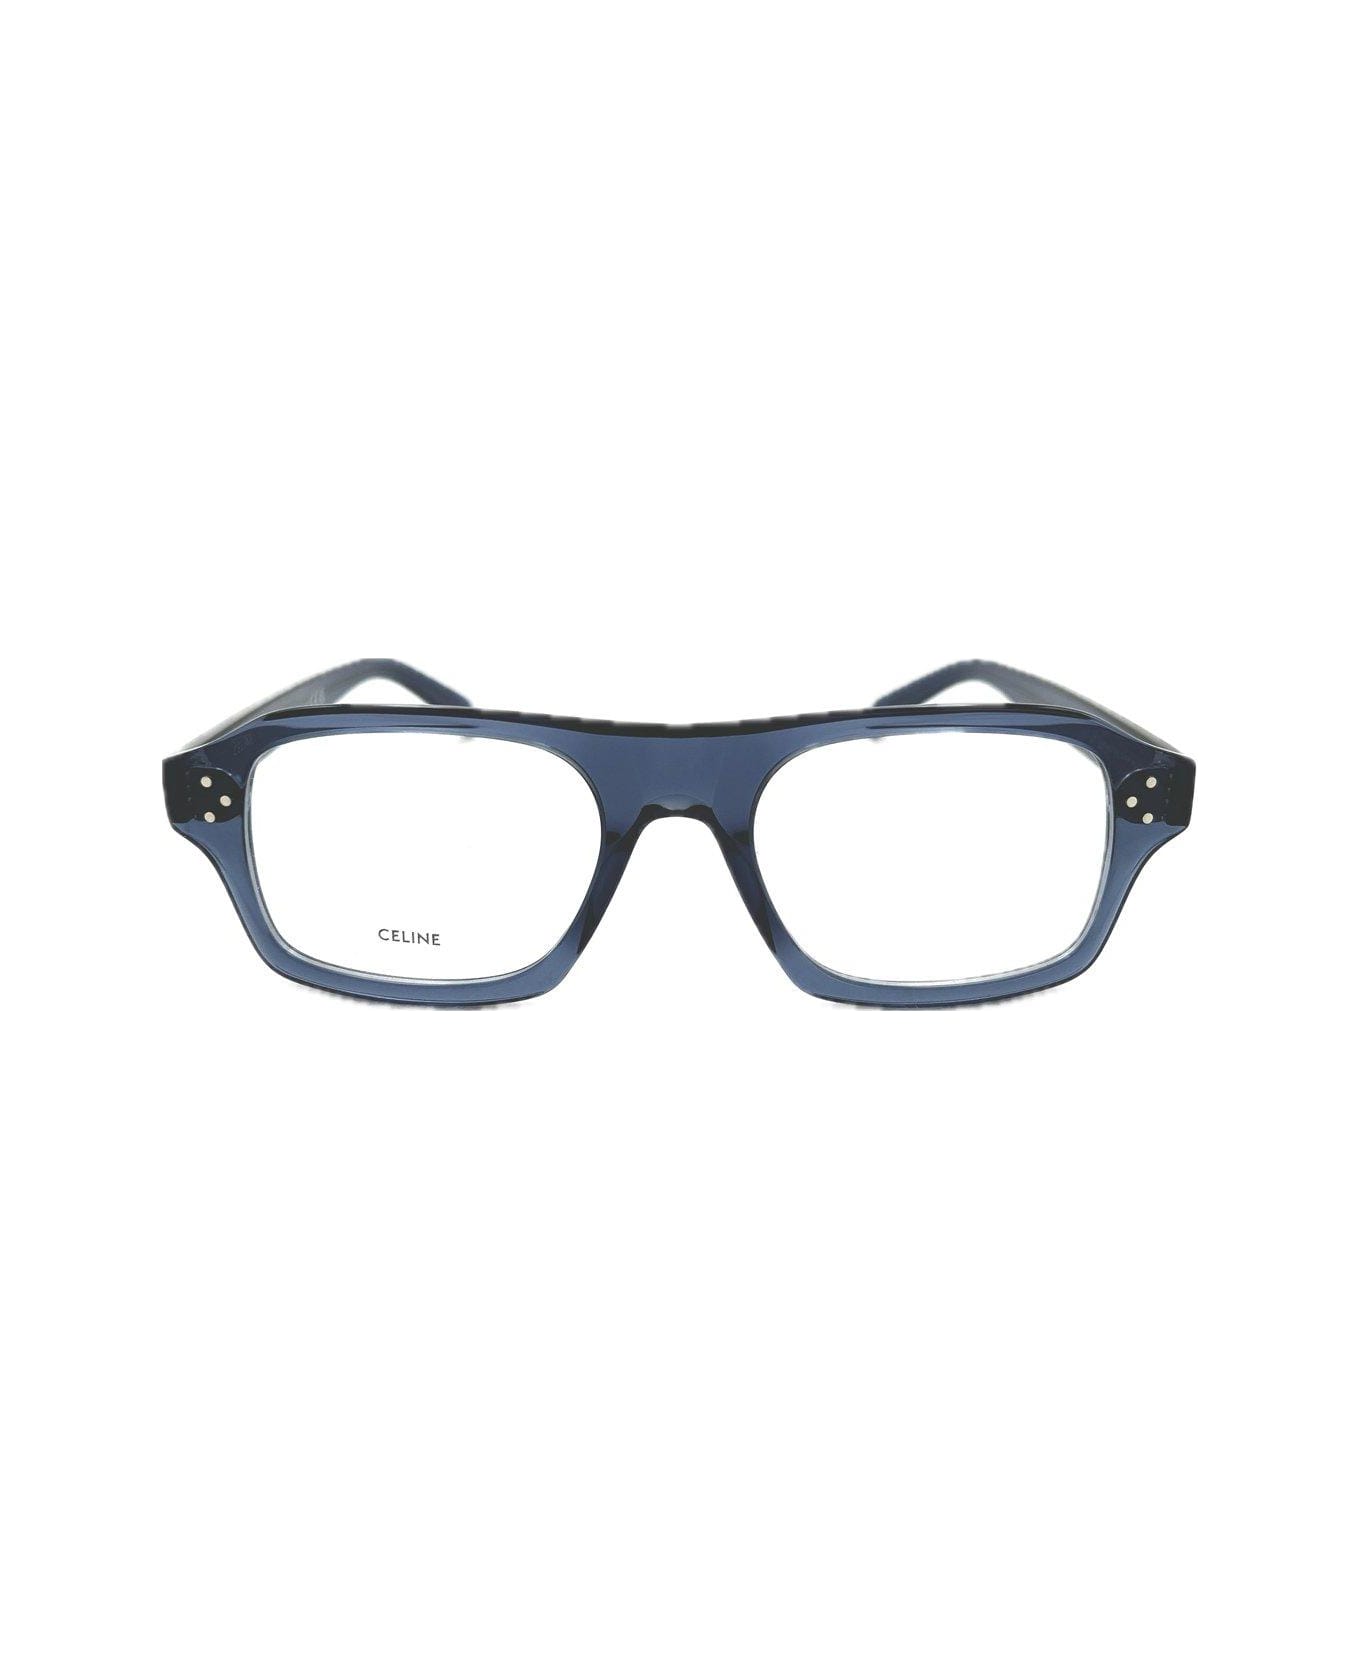 Celine Square Framed Glasses - Blu